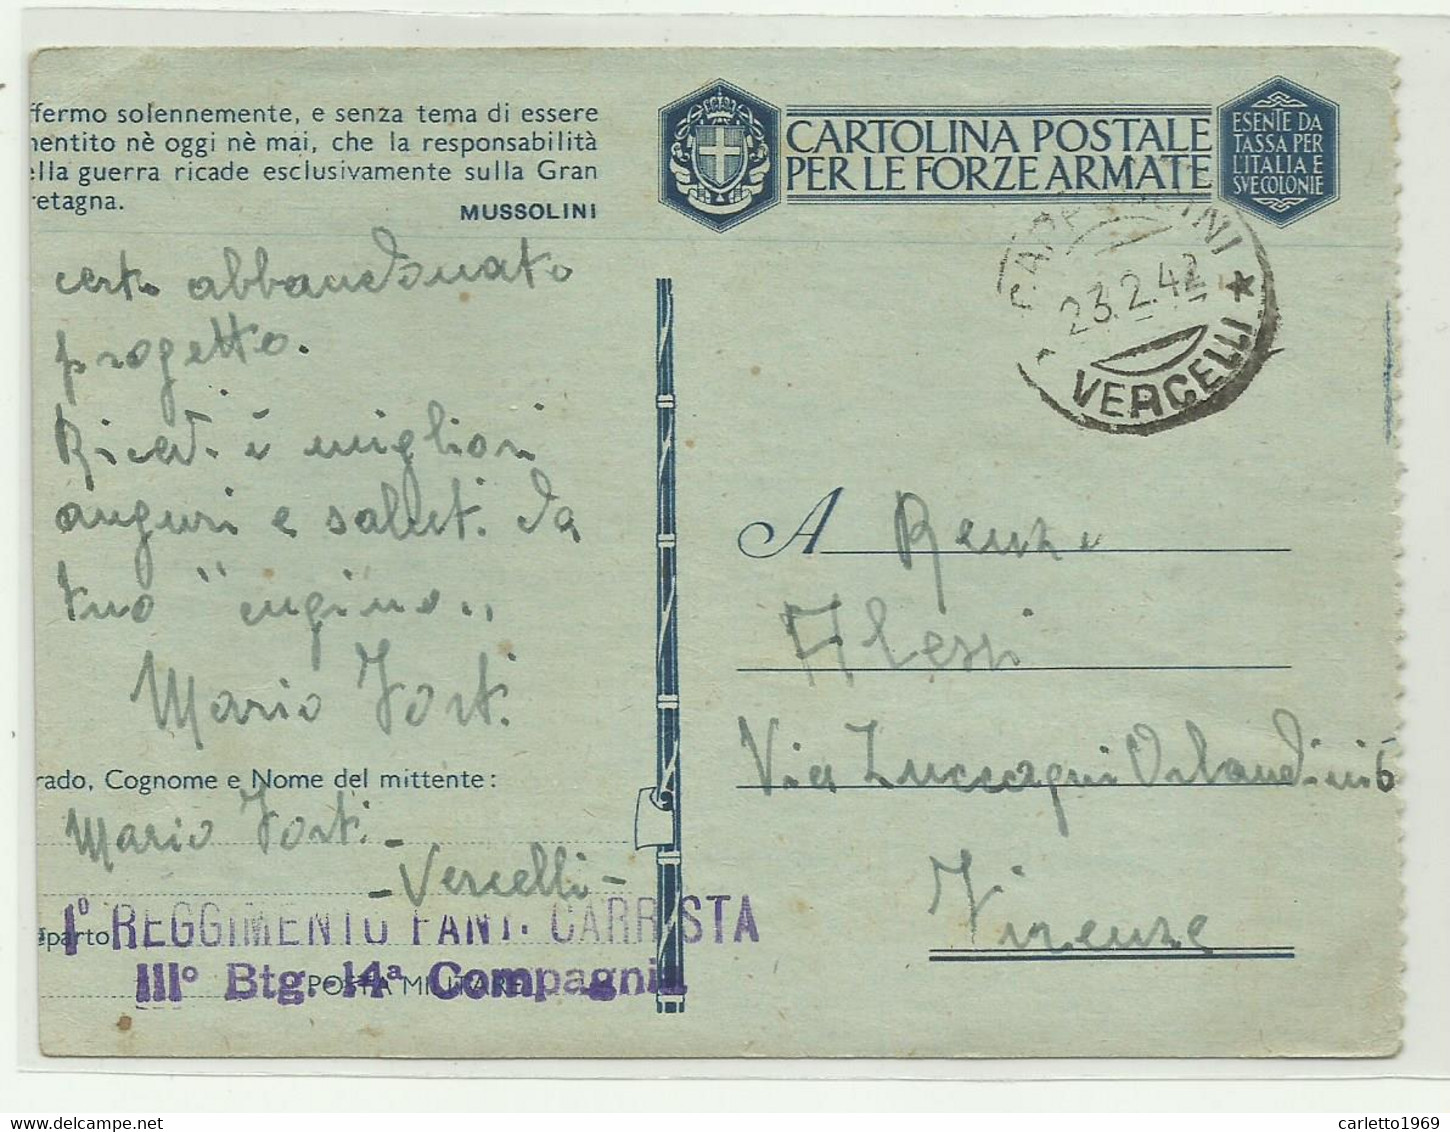 CARTOLINA FORZE ARMATE - I REGGIMENTO FANT. CARRISTA III BTG. 14a COMPAGNIA - VERCELLI  1942 - Stamped Stationery